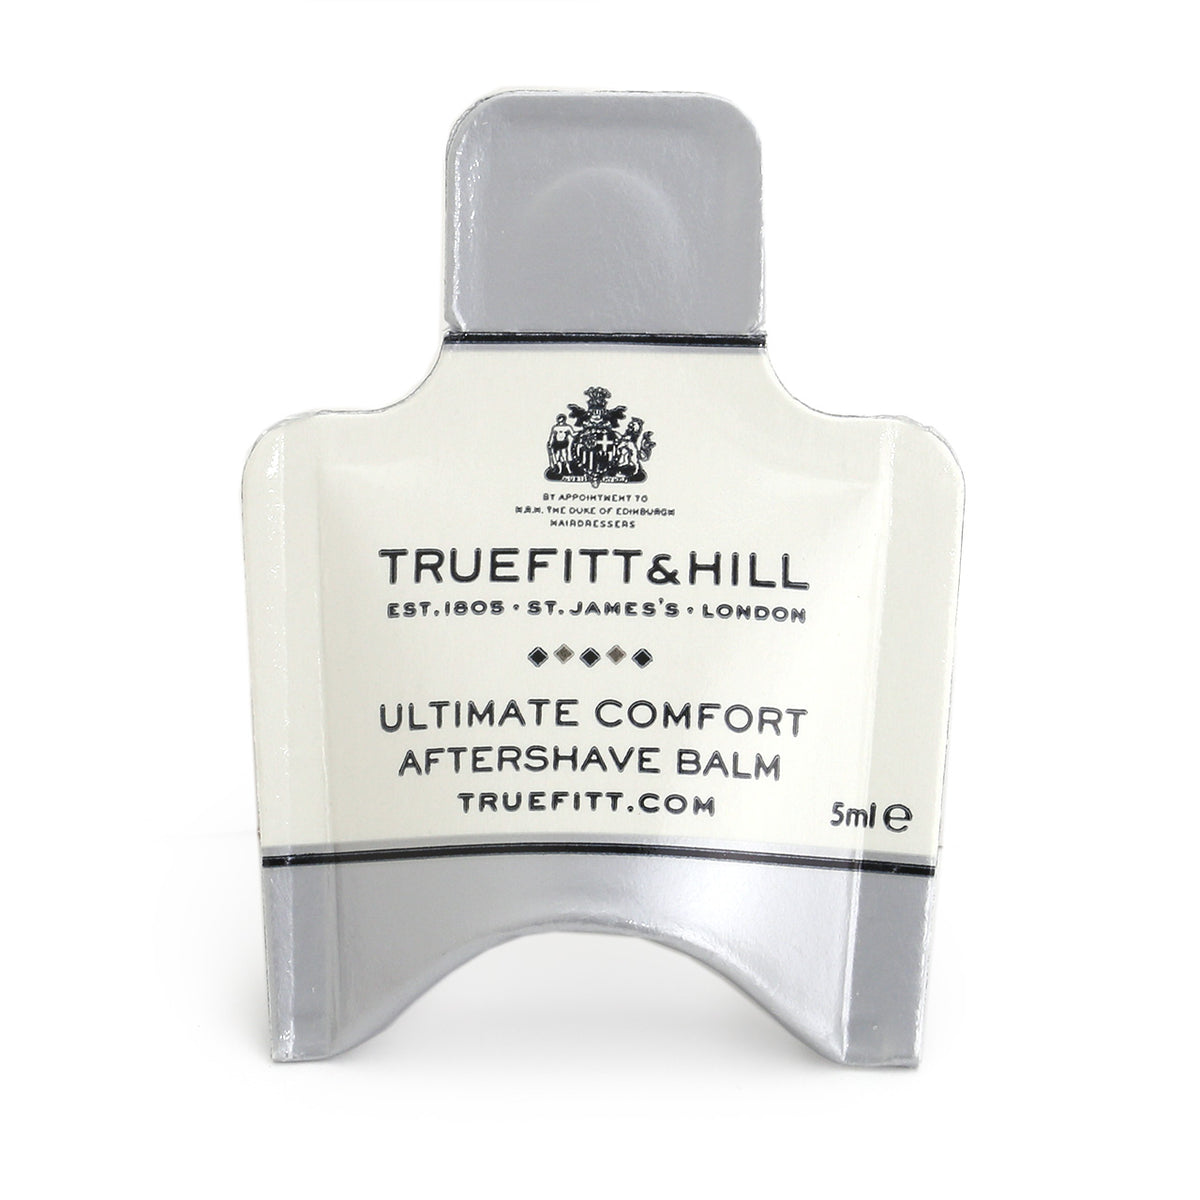 Ultimate Comfort Aftershave Balm Sample 5ml